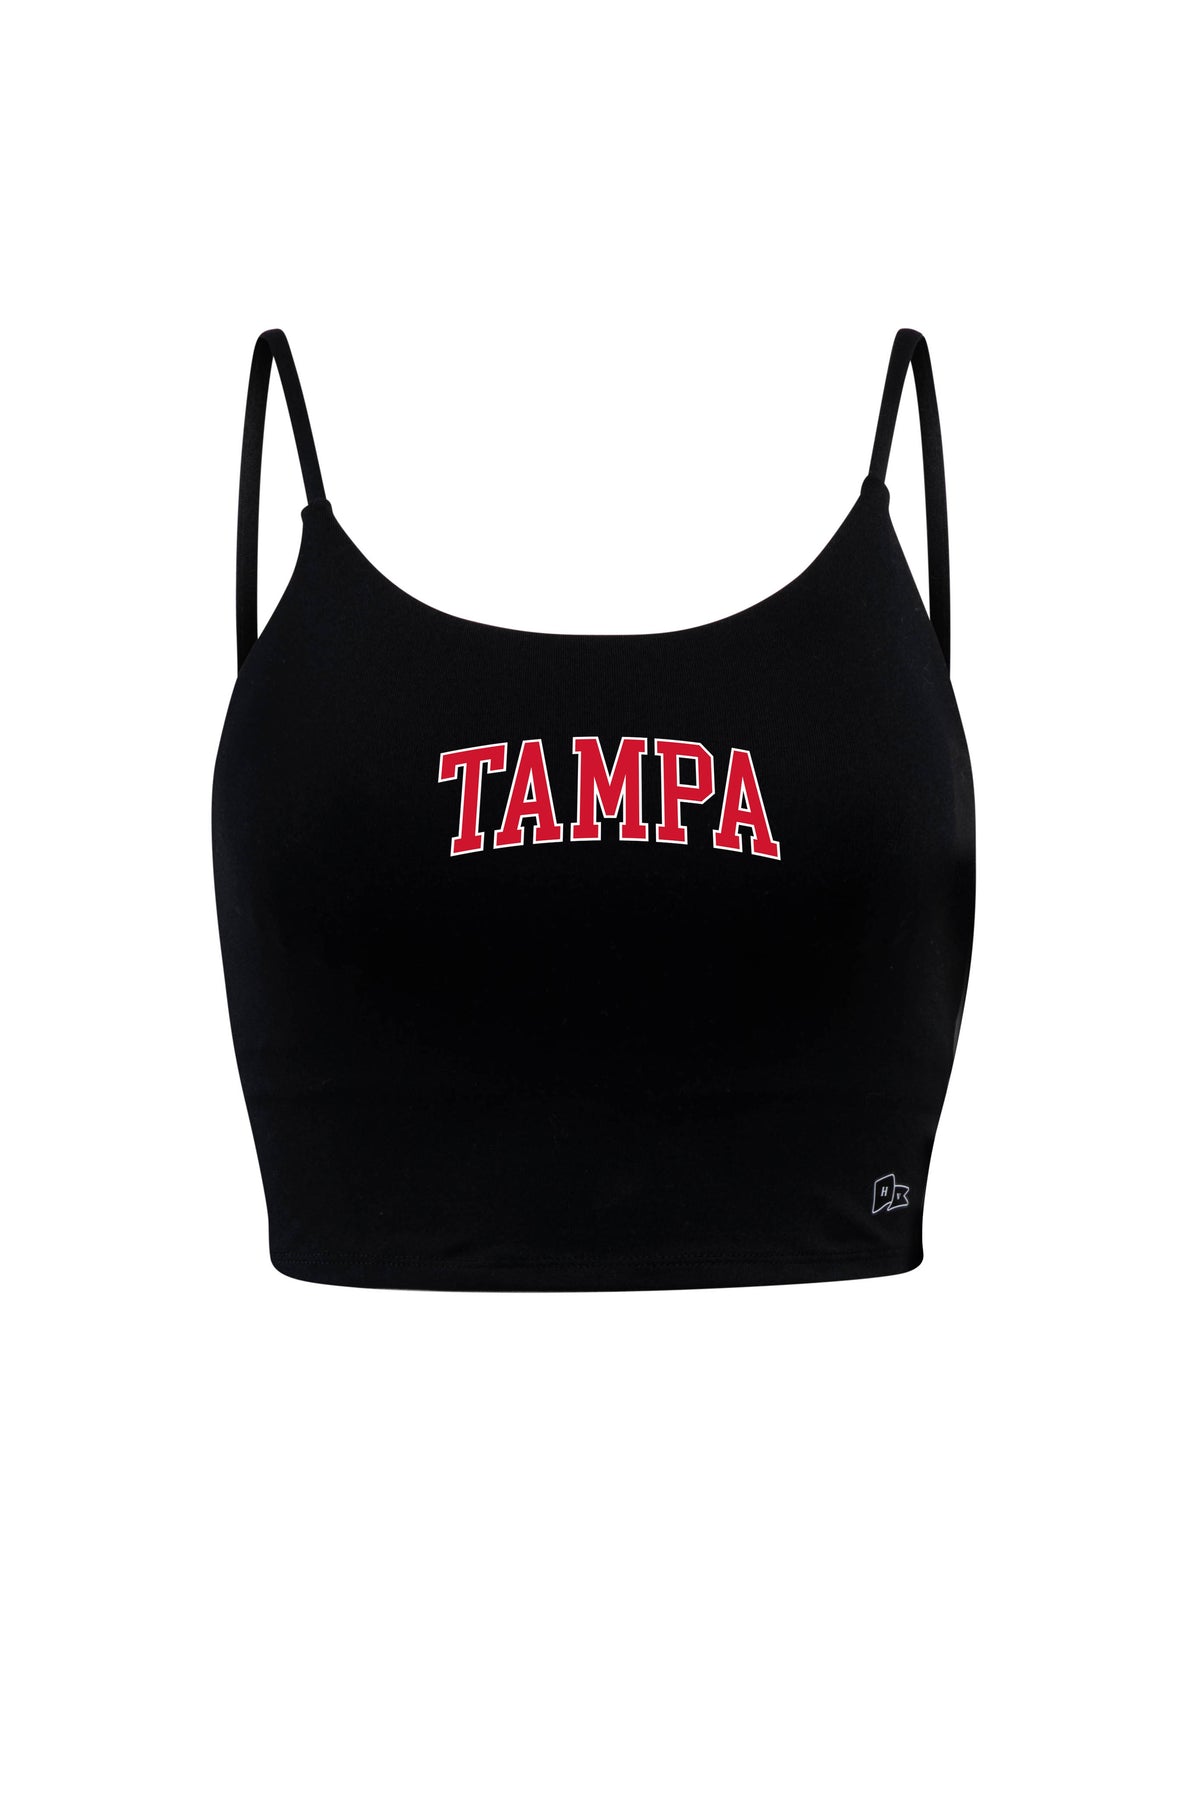 University of Tampa Bra Tank Top